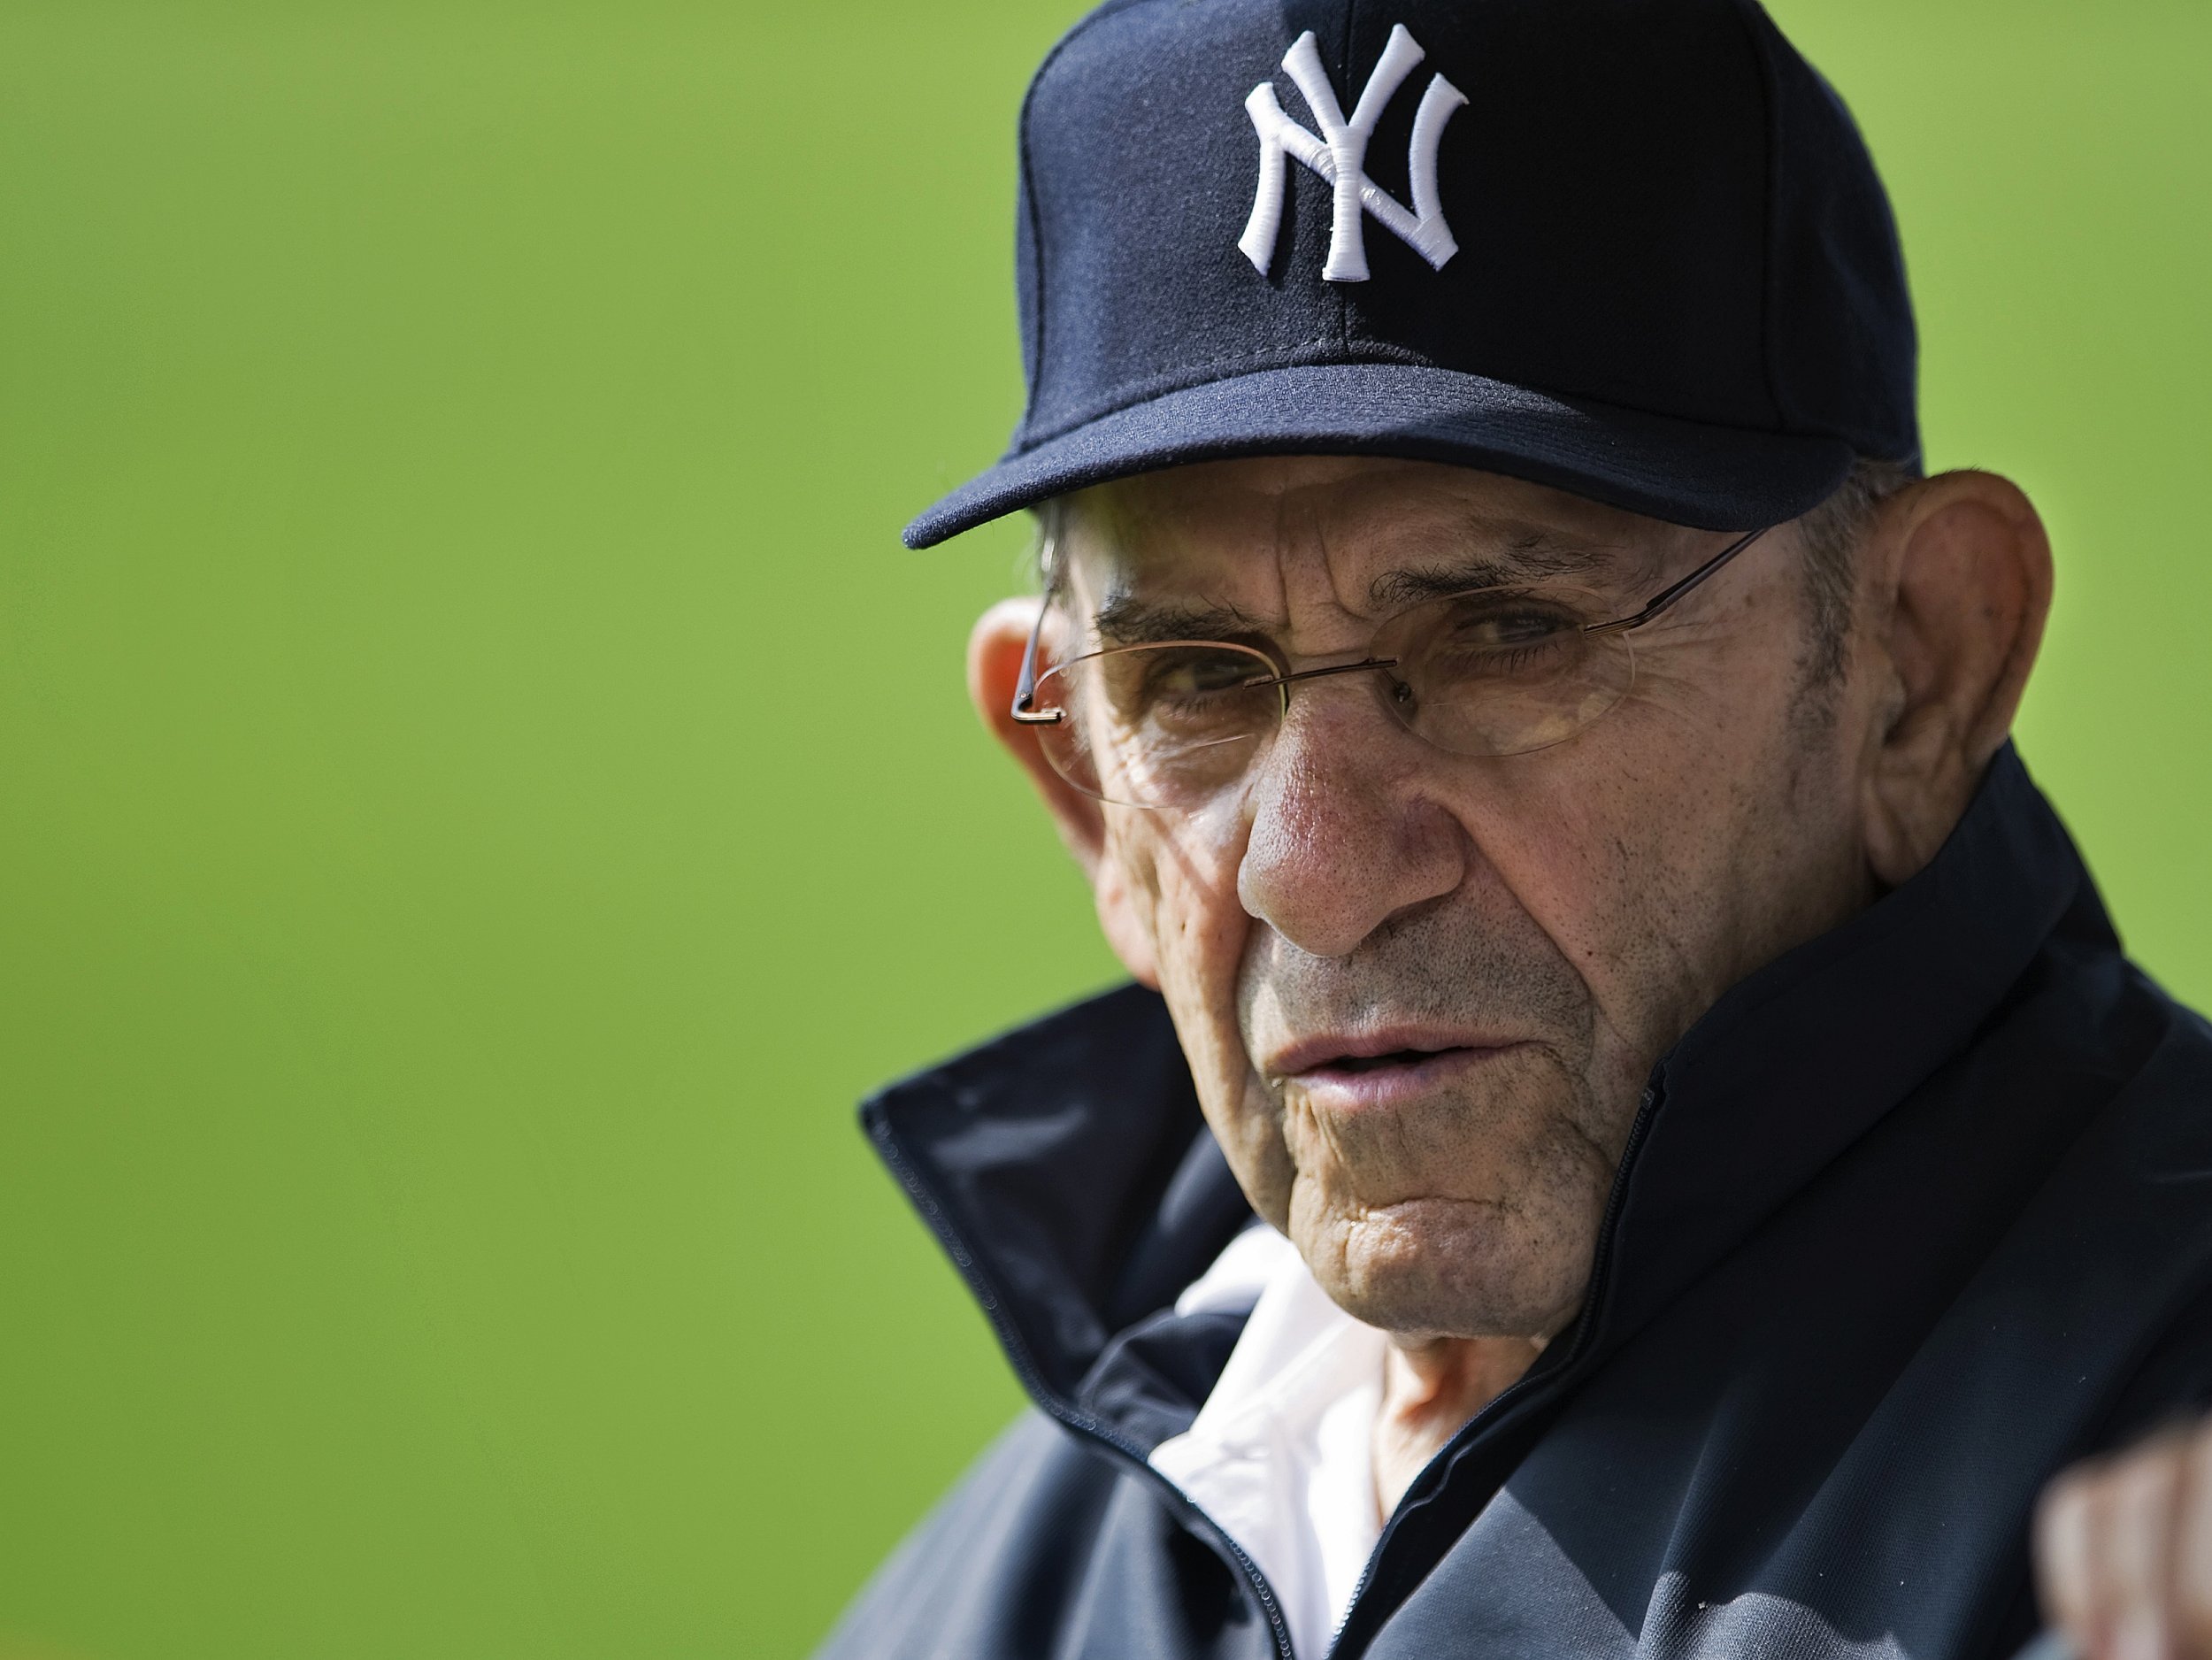 Yankees Hall of Fame catcher Yogi Berra has died, News